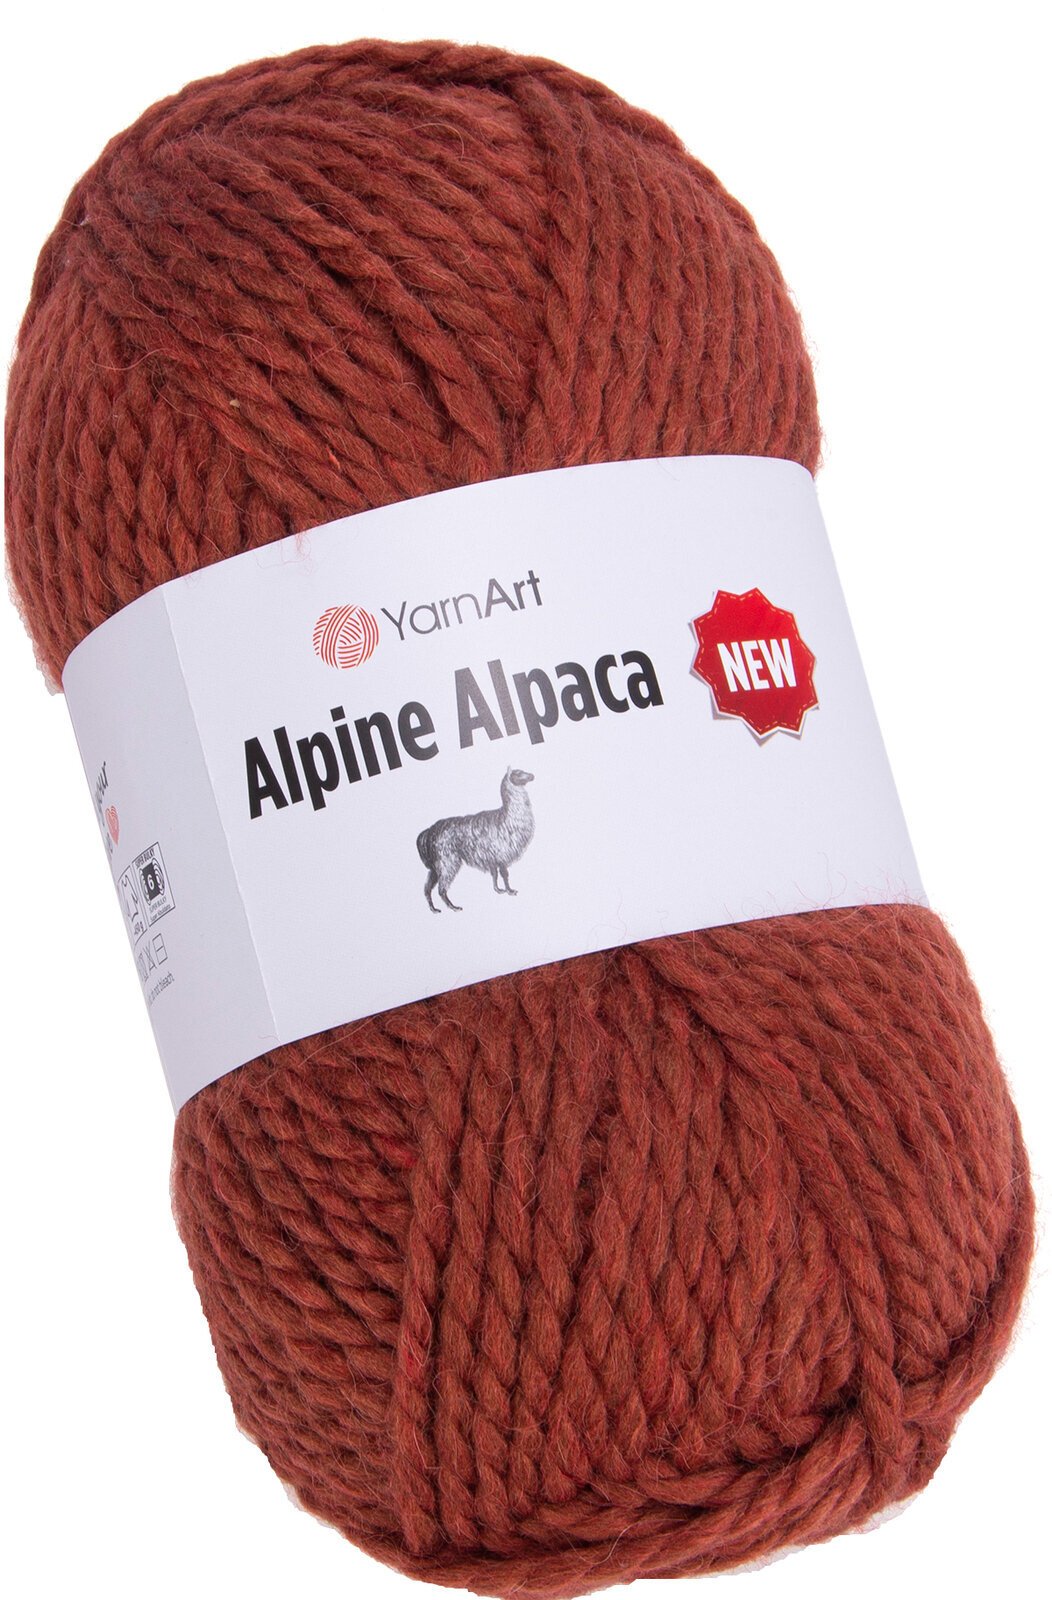 Knitting Yarn Yarn Art Alpine Alpaca New 1452 Knitting Yarn